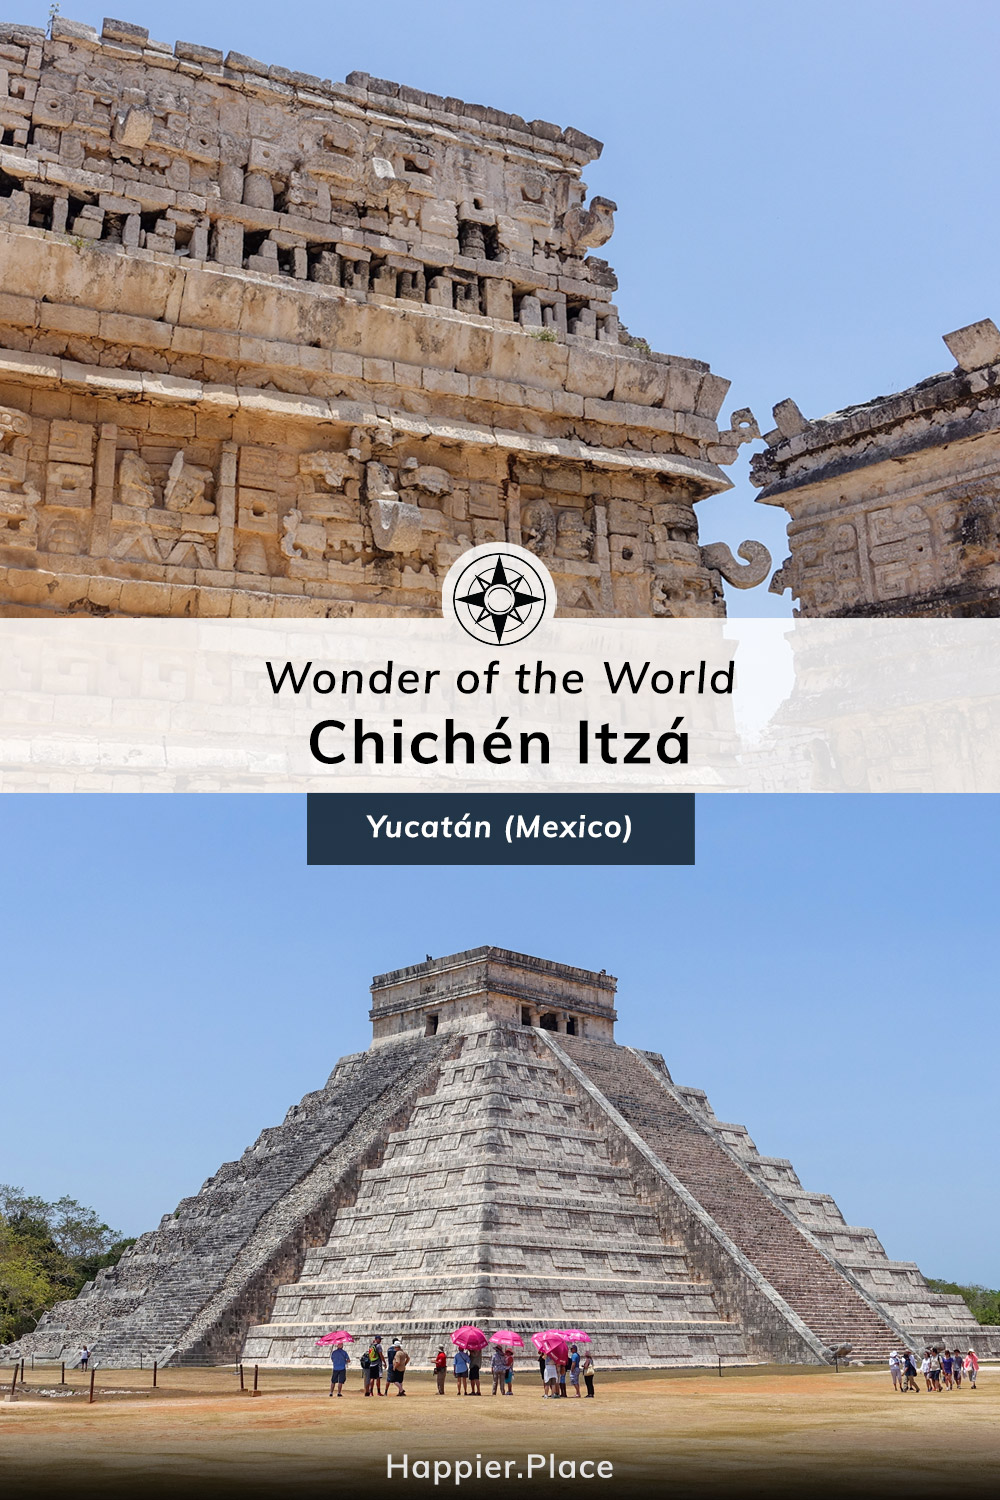 Wonder of the World, Chichen Itza pyramid El Castillo, Temple of Kukulkan, La Iglesia, Las Monjas Group, Yucatan, Mexico, Happier Place